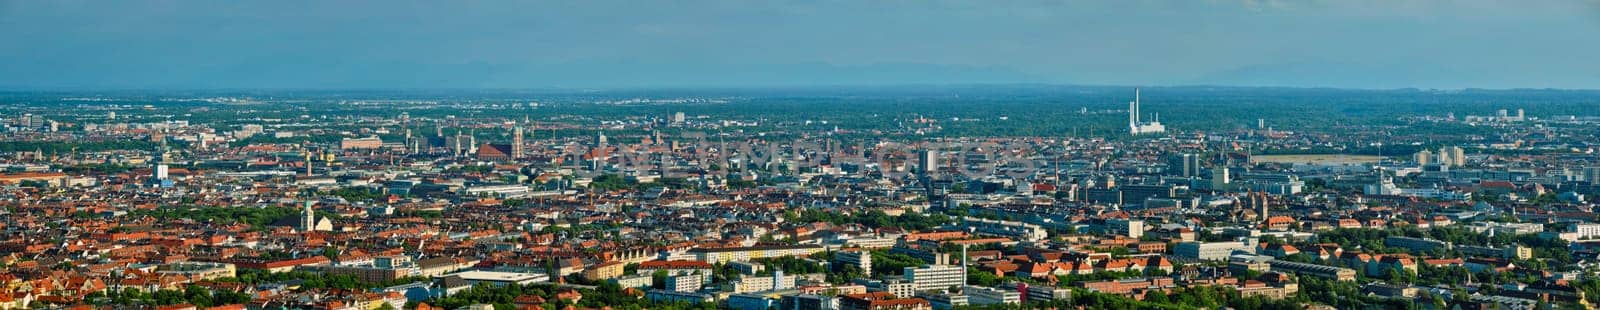 Aerial panorama of Munich. Munich, Bavaria, Germany by dimol